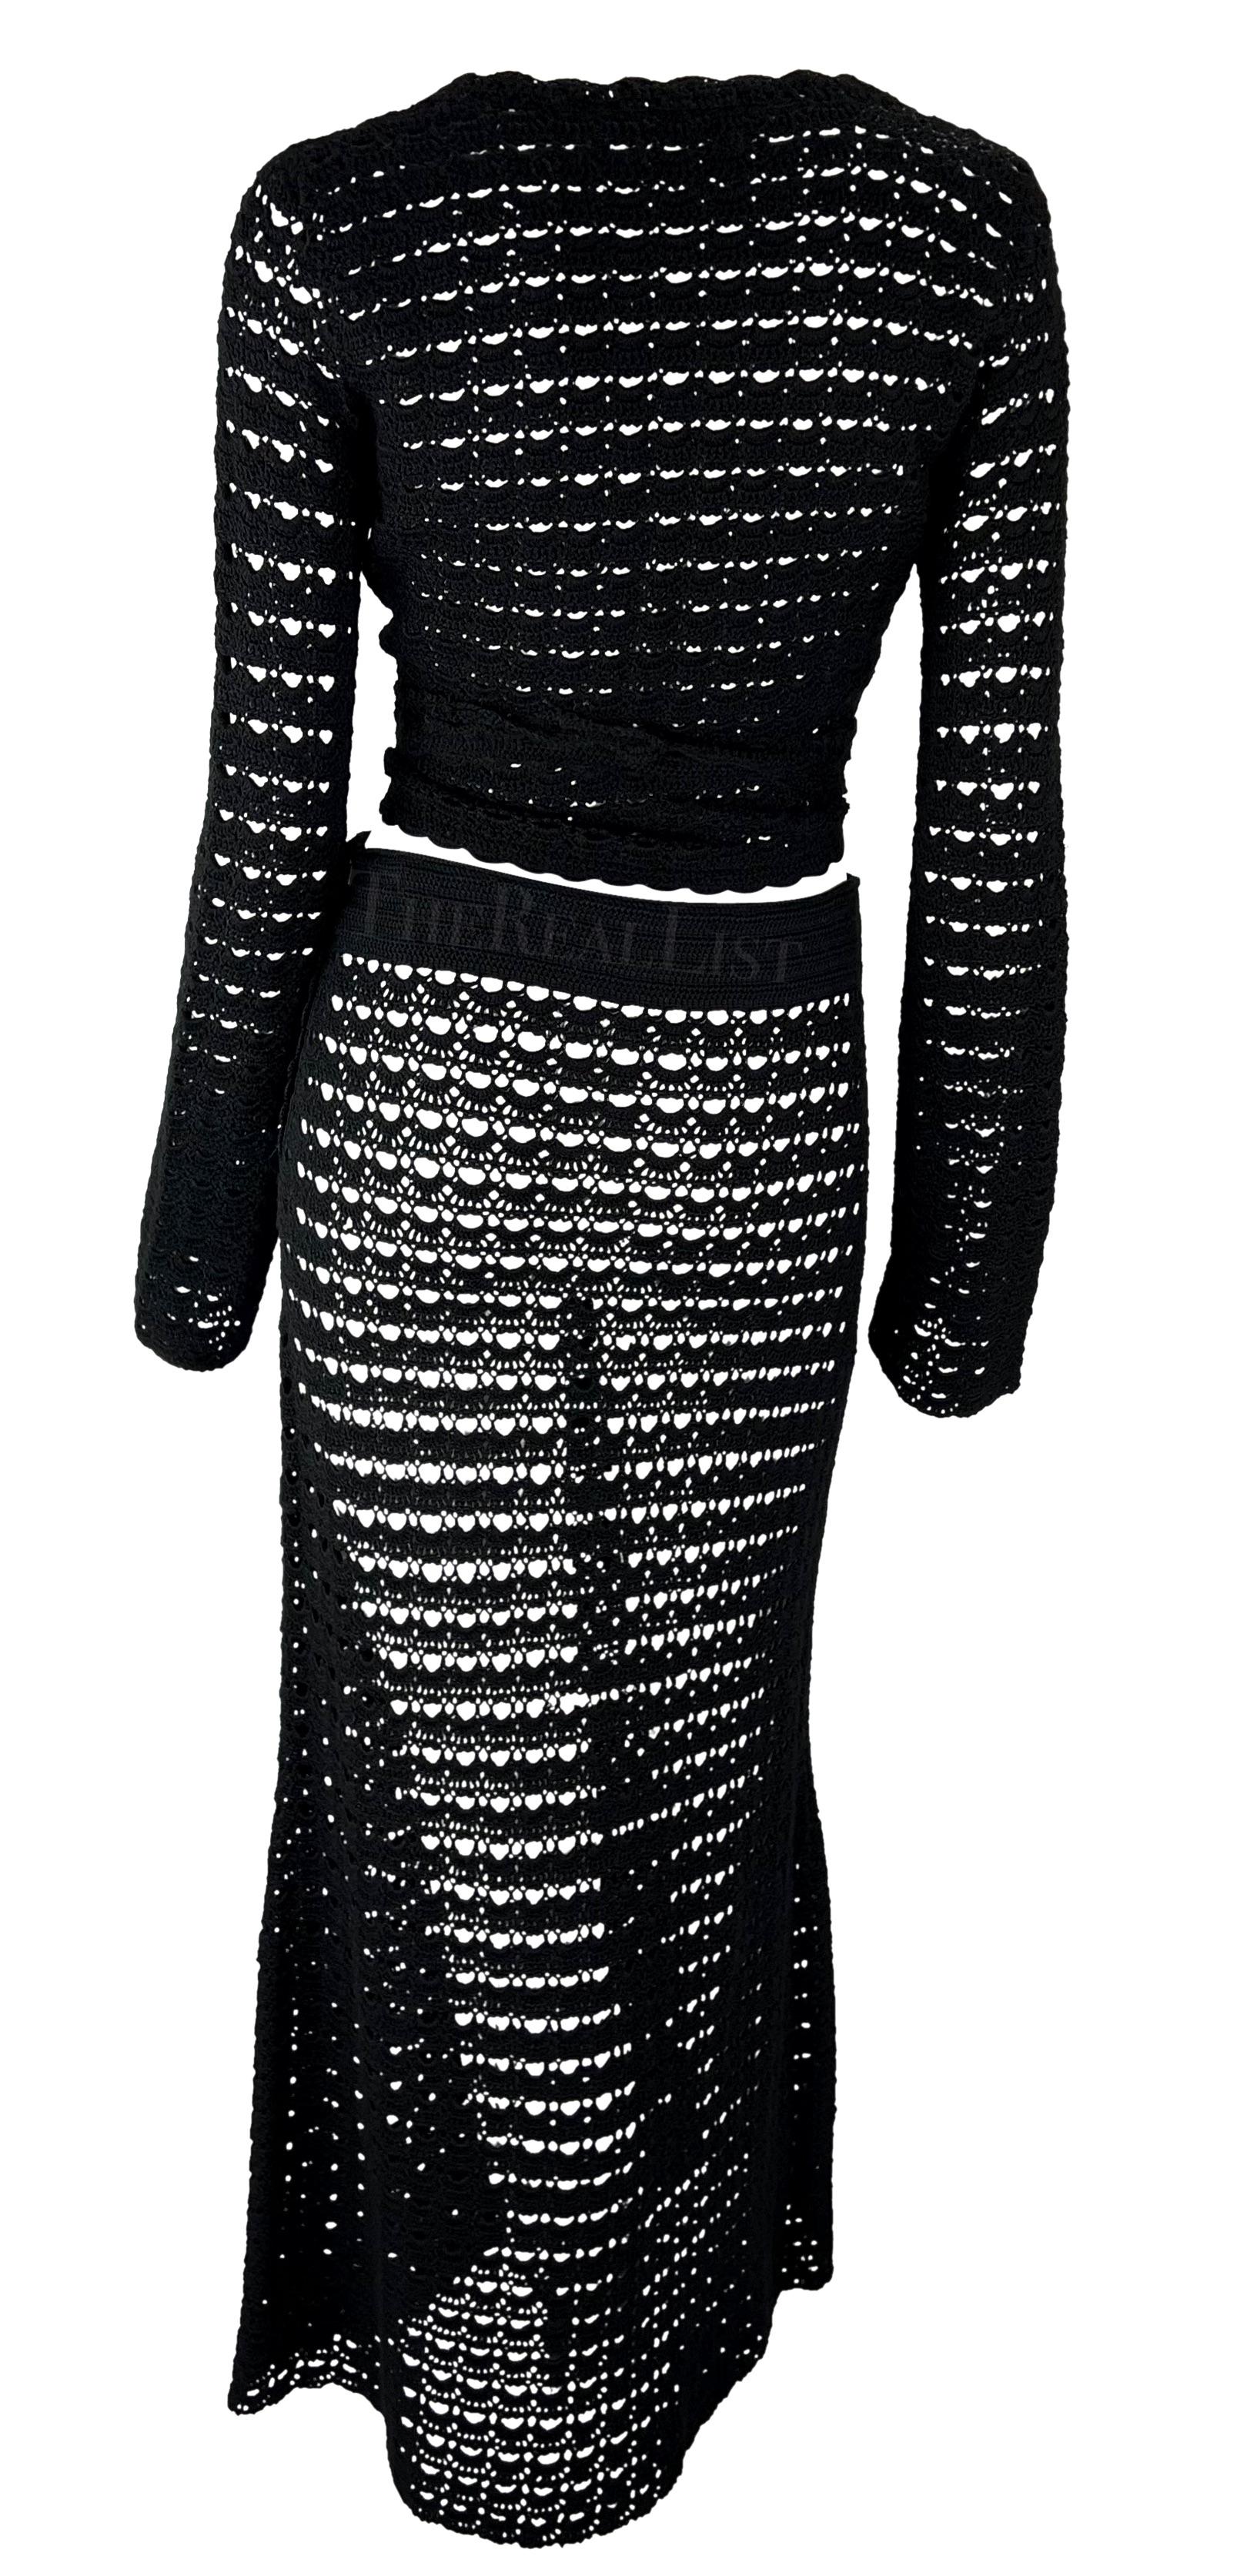 S/S 1997 Dolce & Gabbana Black Knit Crochet Maxi Skirt Wrap Top Skirt Set For Sale 3